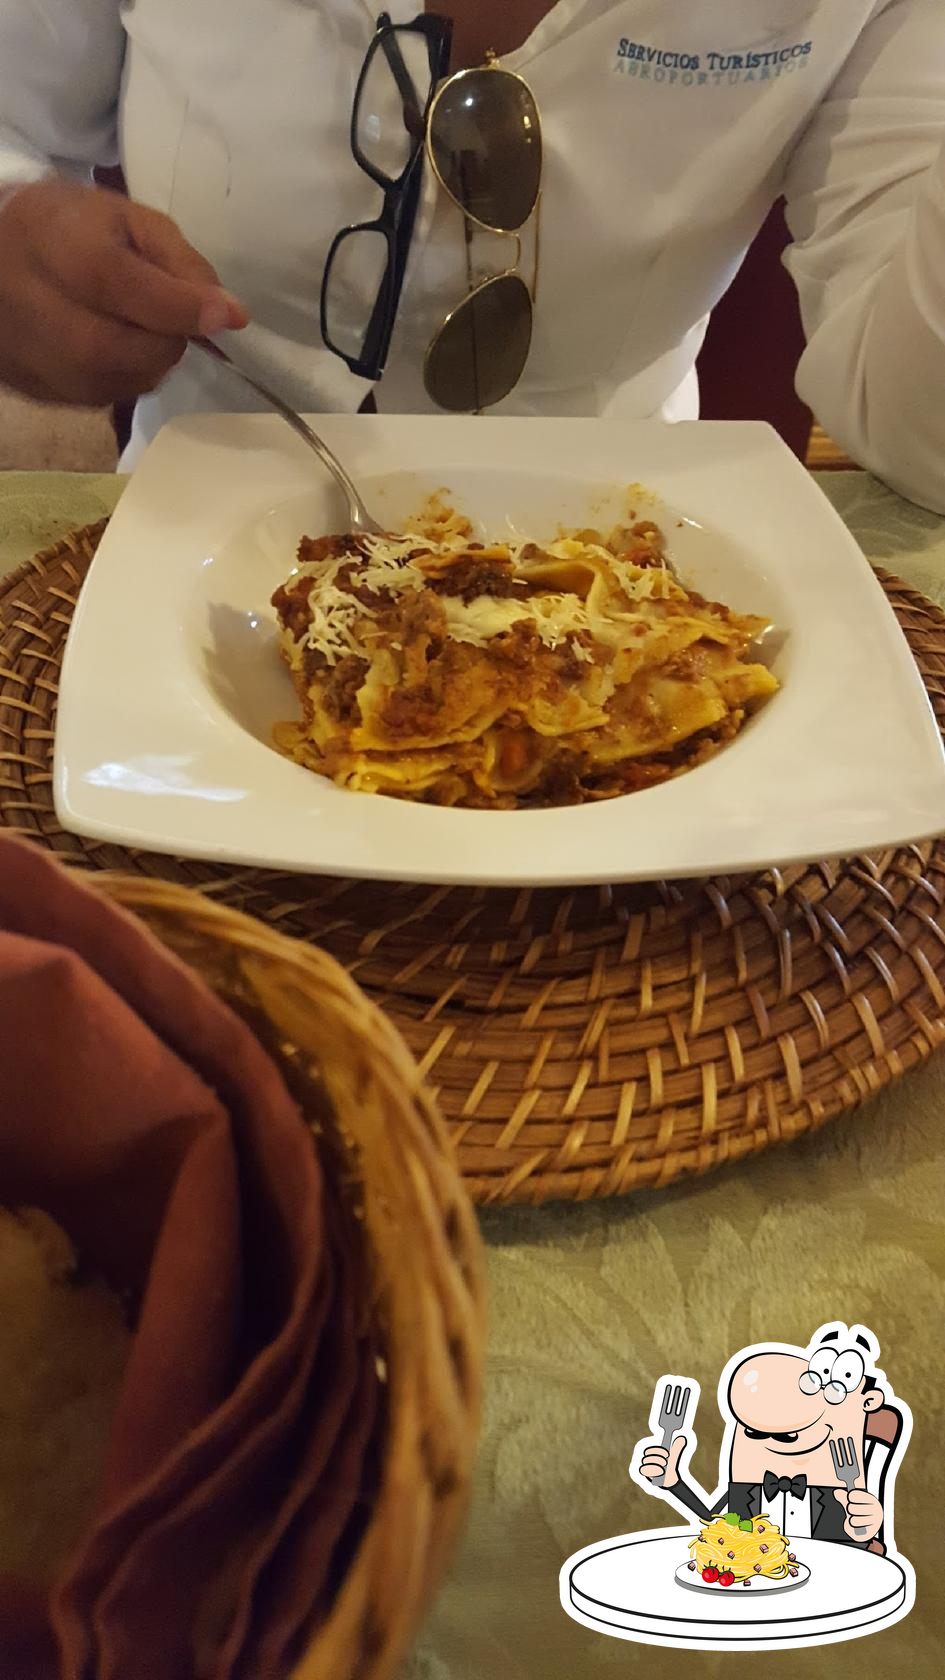 Restaurante La cucina italiana, Cozumel - Opiniones del restaurante